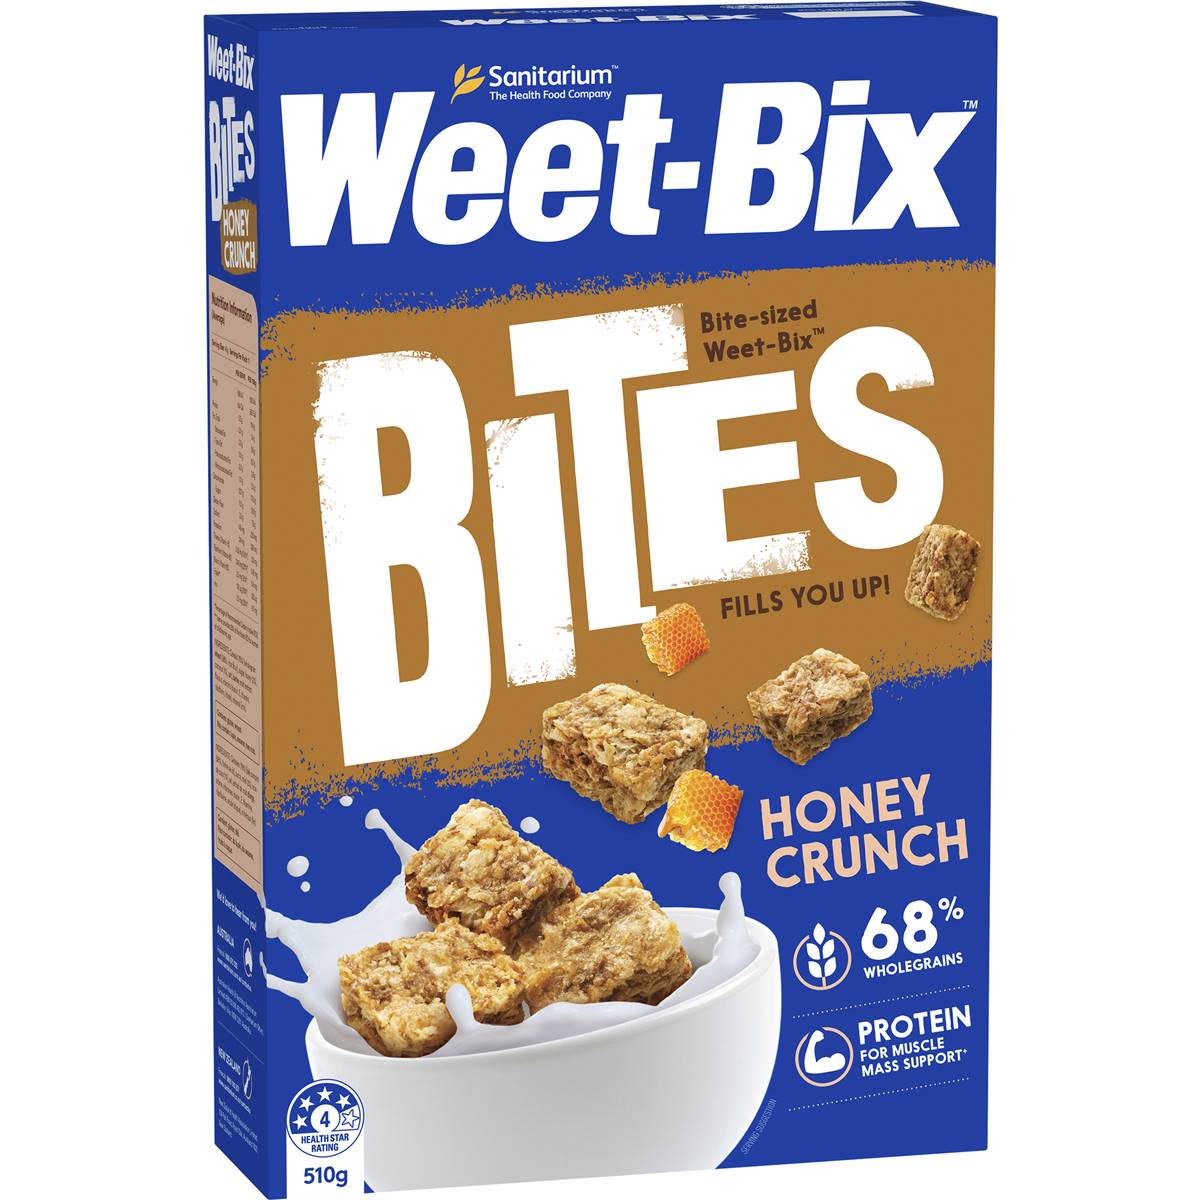 Sanitarium Weet-bix Bites Crunchy Honey Breakfast Cereal 510g